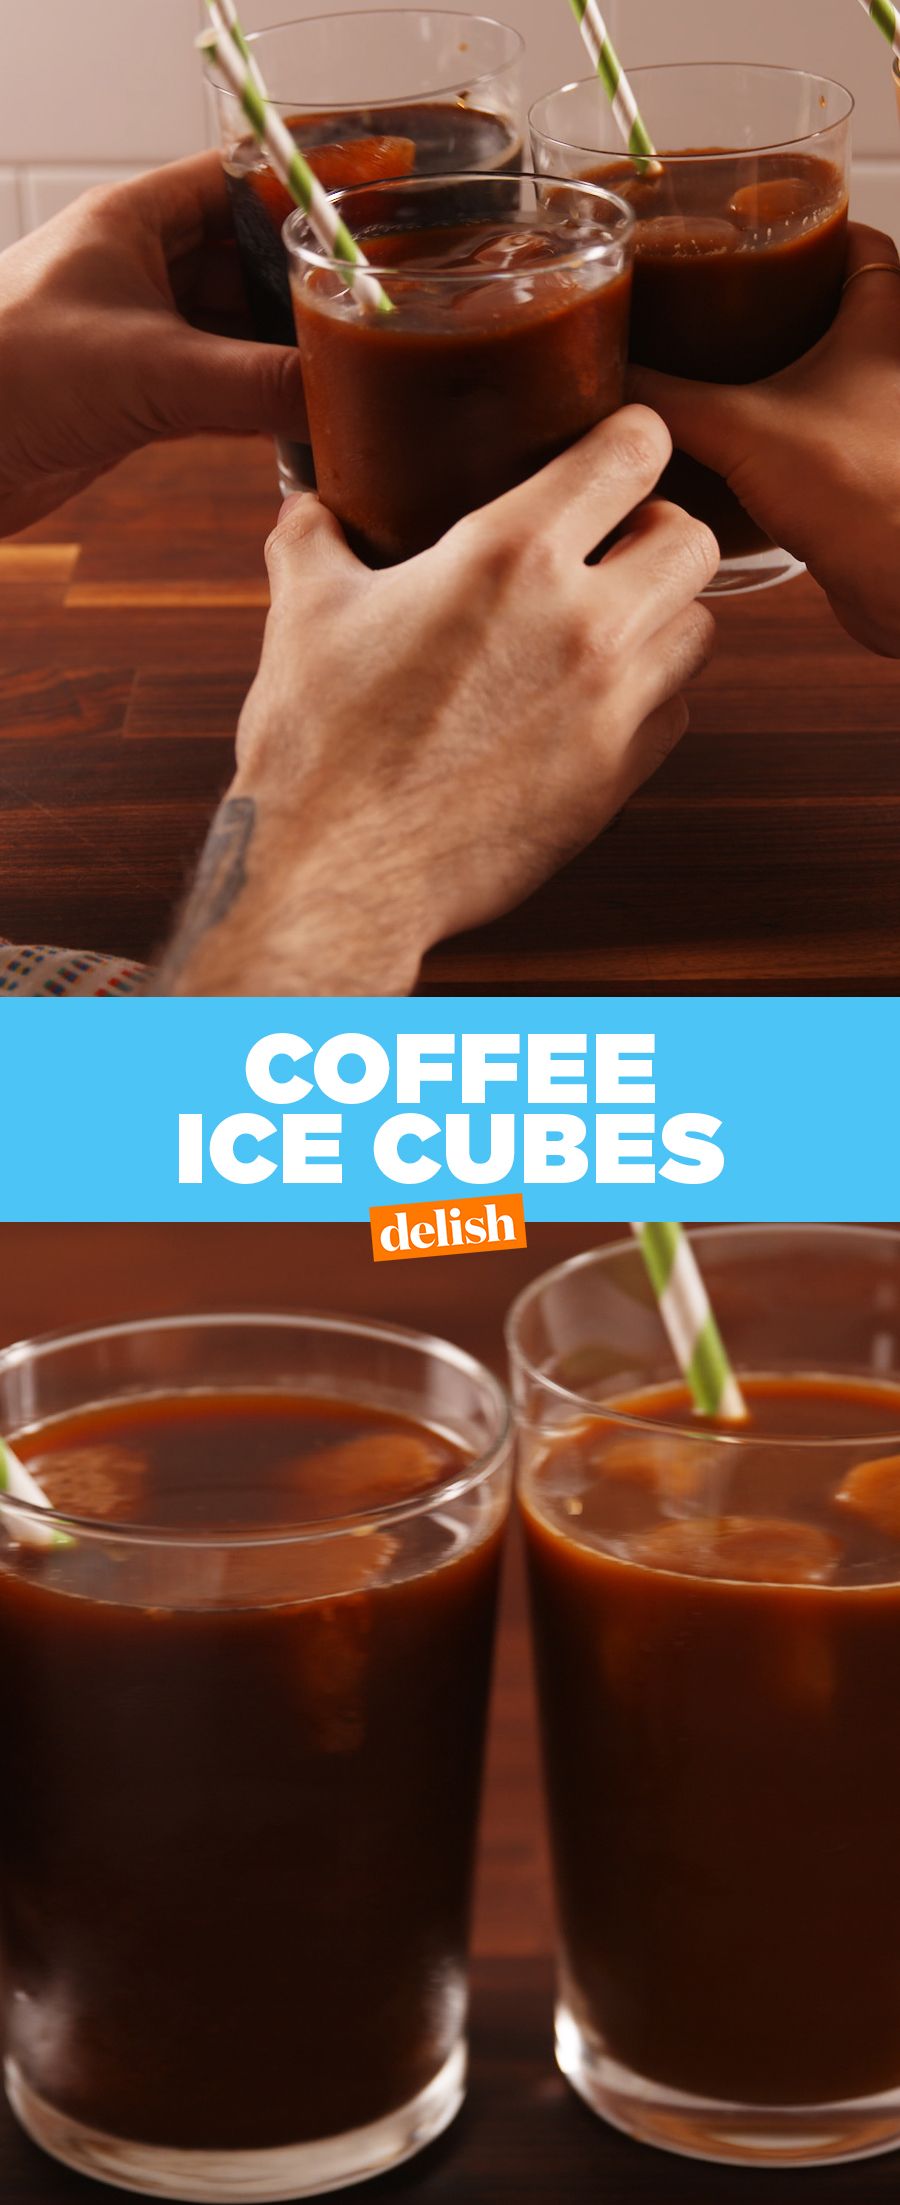 How to Make Coffee Ice Cubes - Cameron's Coffee